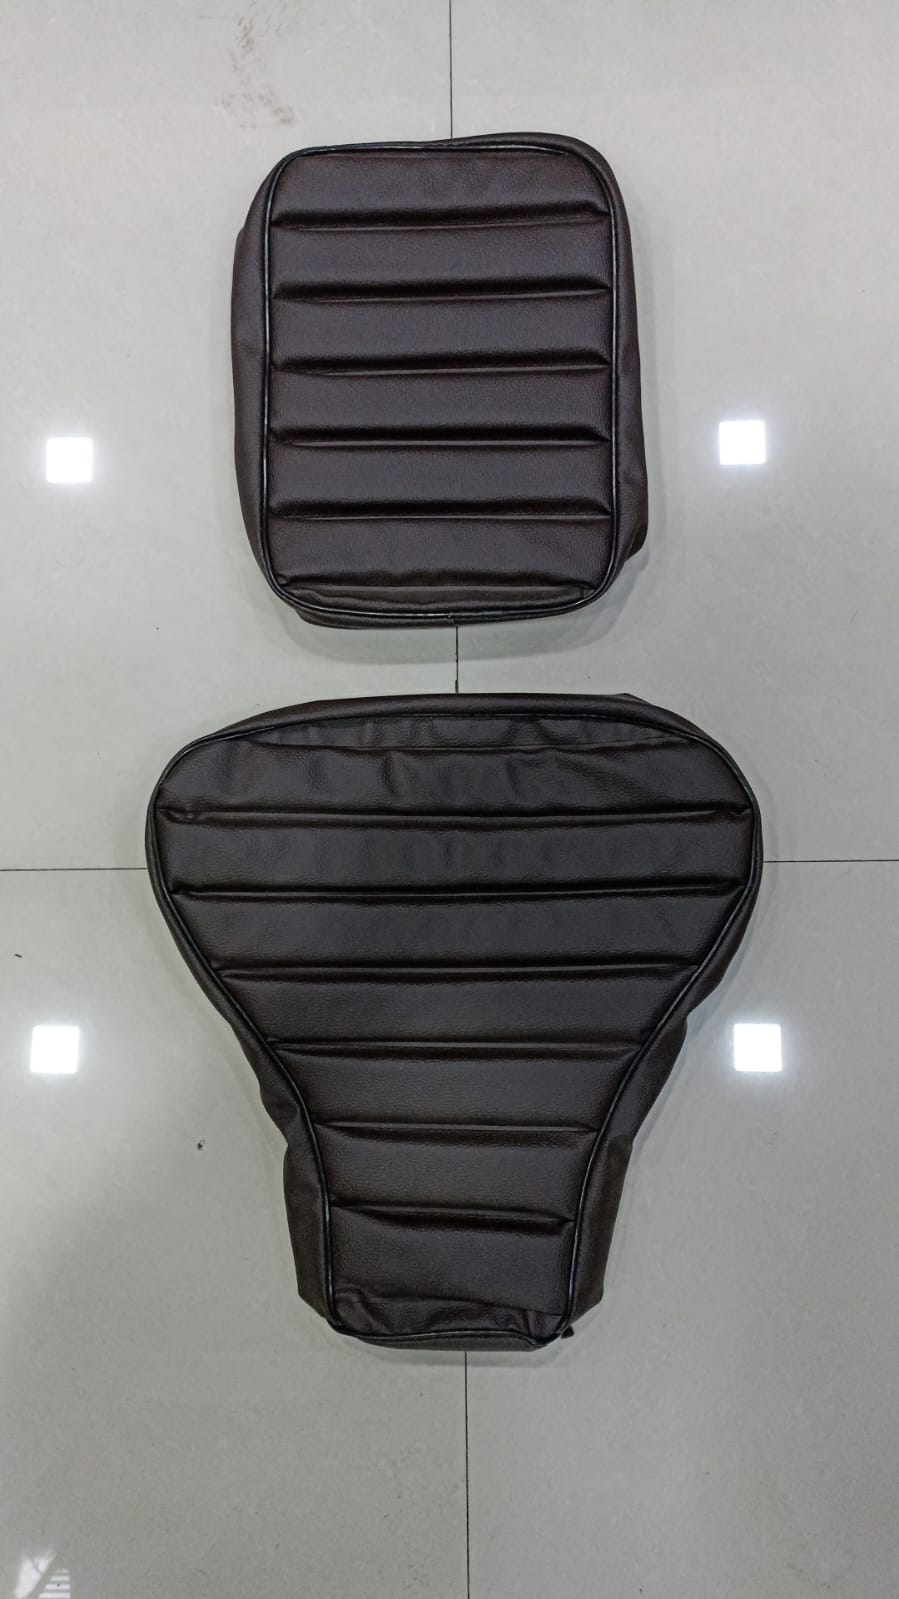 Royal Enfield Bullet Seat Cover | Black | Brown